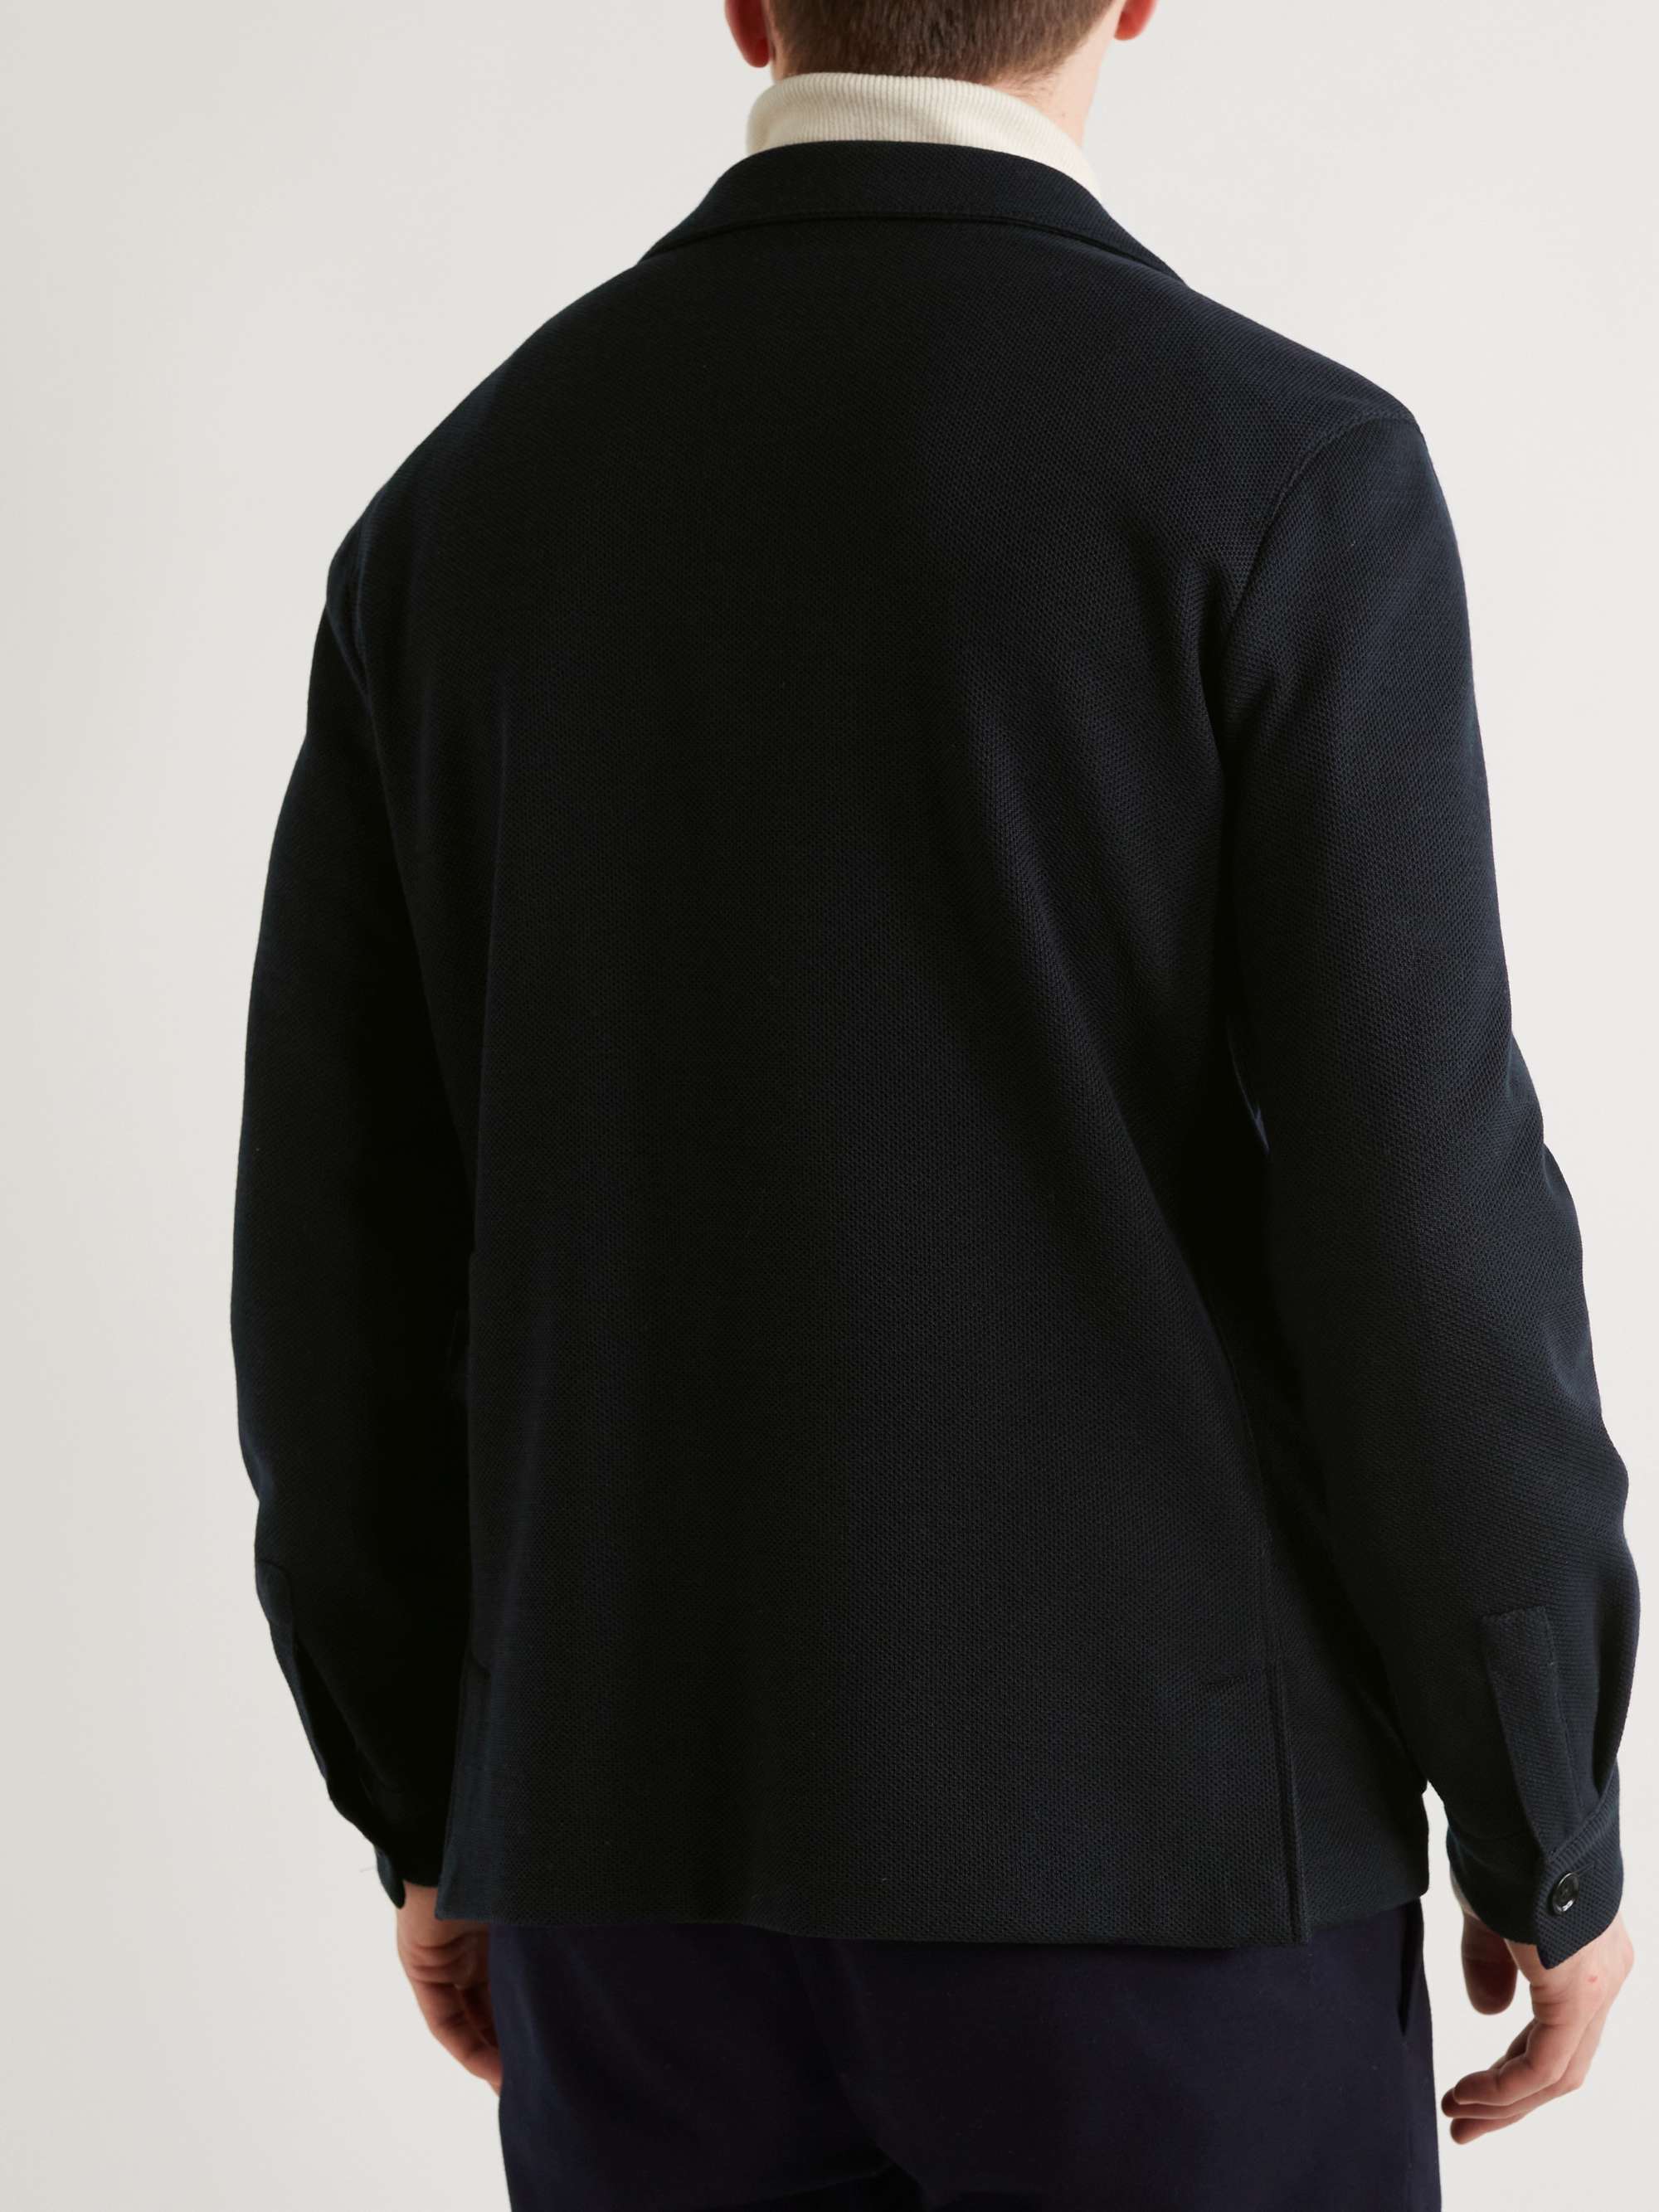 ZEGNA Wool and Cotton-Blend Piqué Jacket